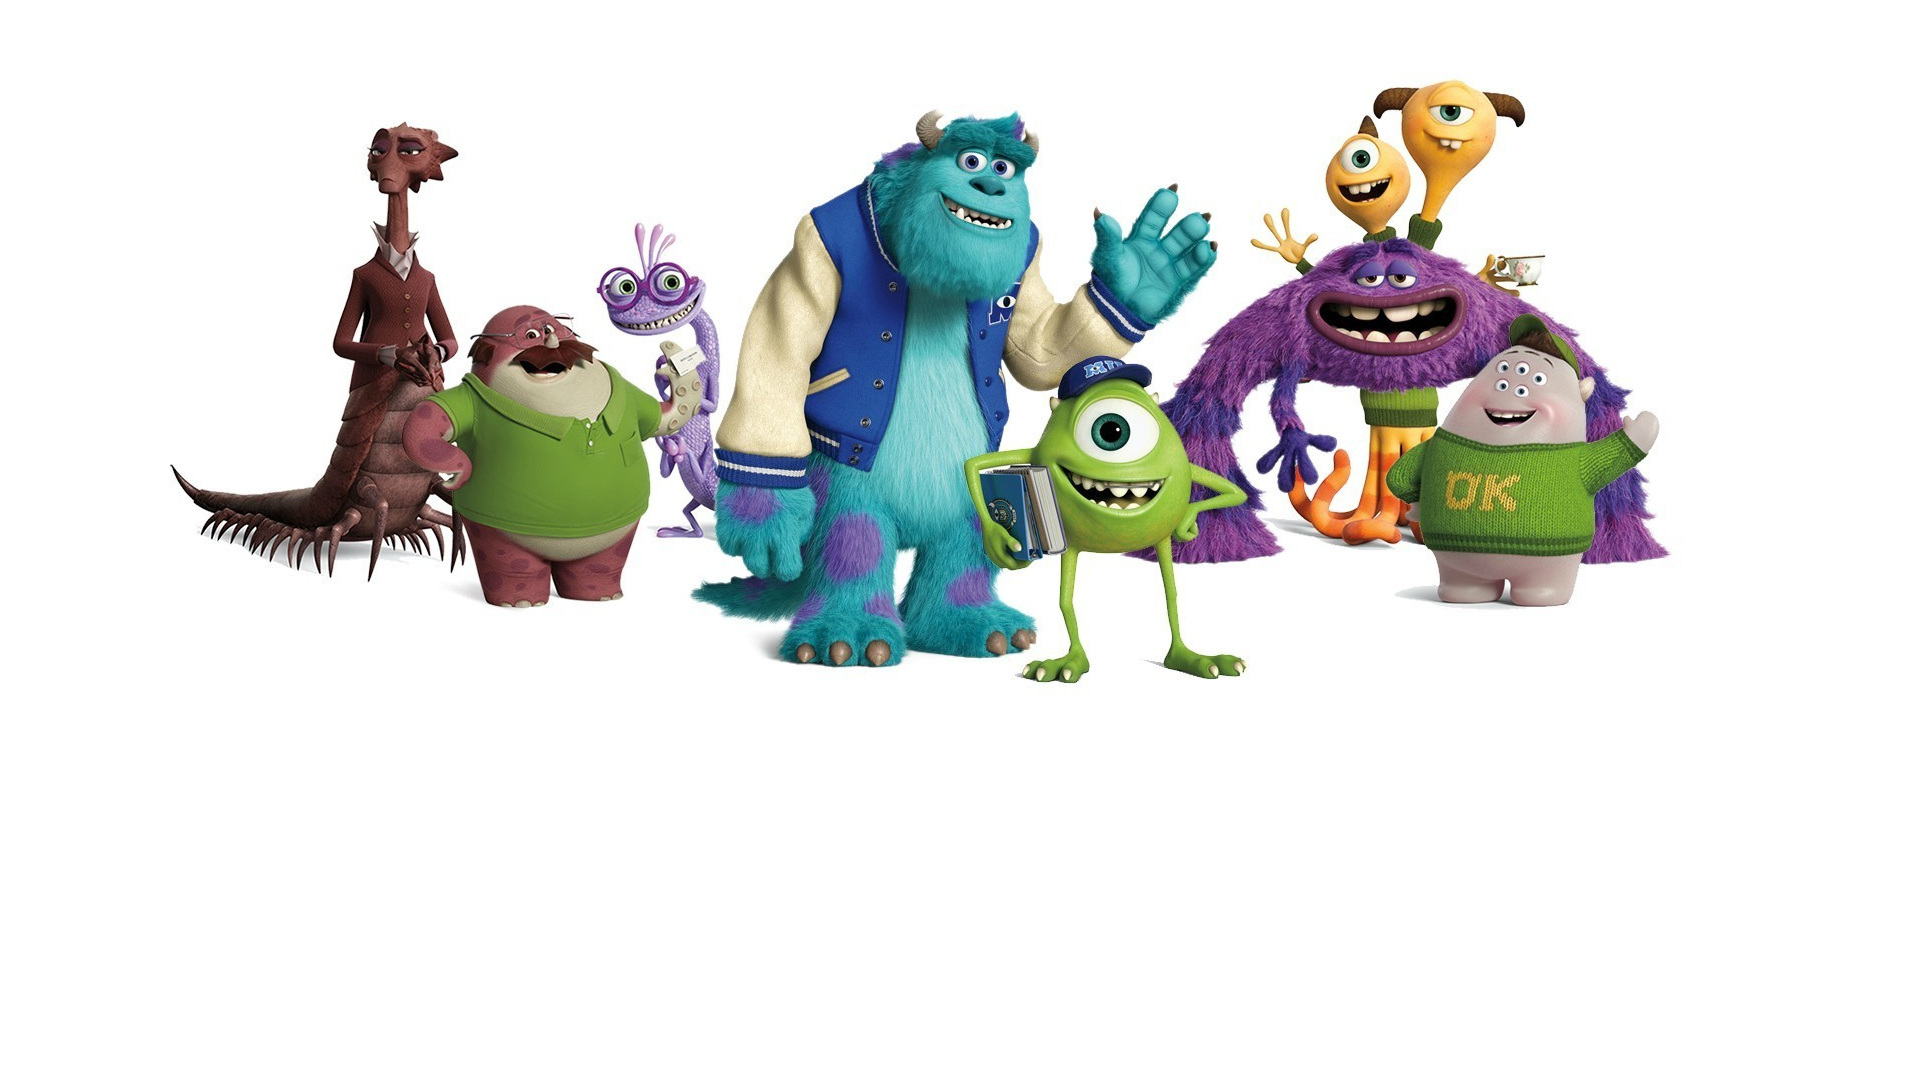 Movie Monsters University HD Wallpaper | Background Image